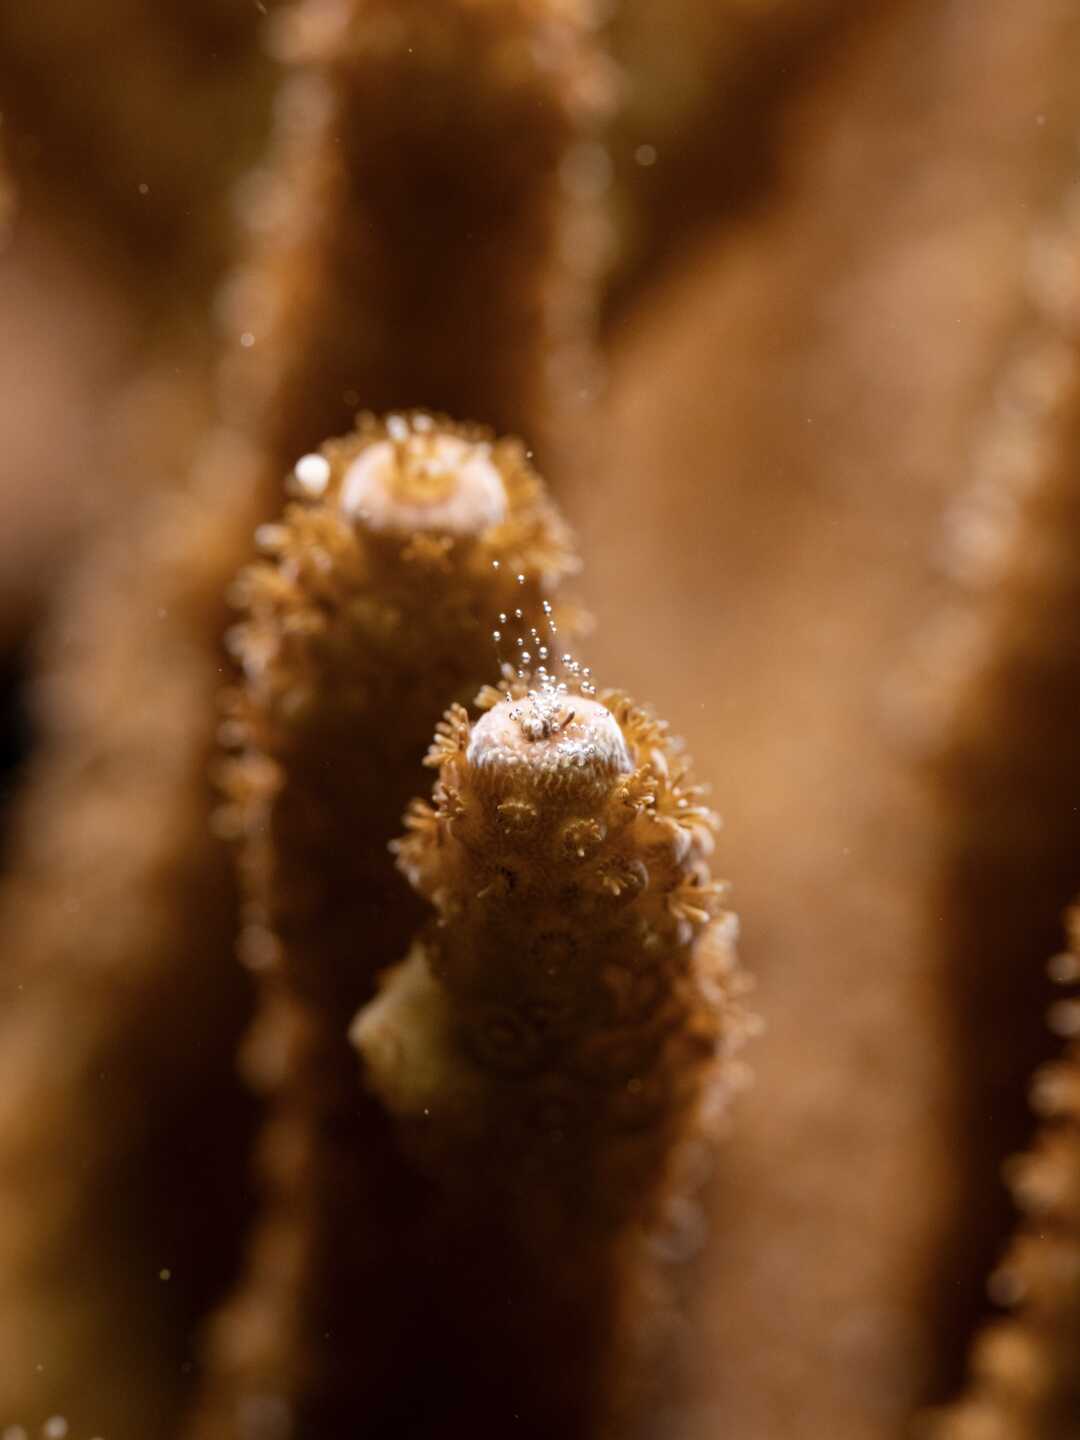 Corals release gametes under white light.